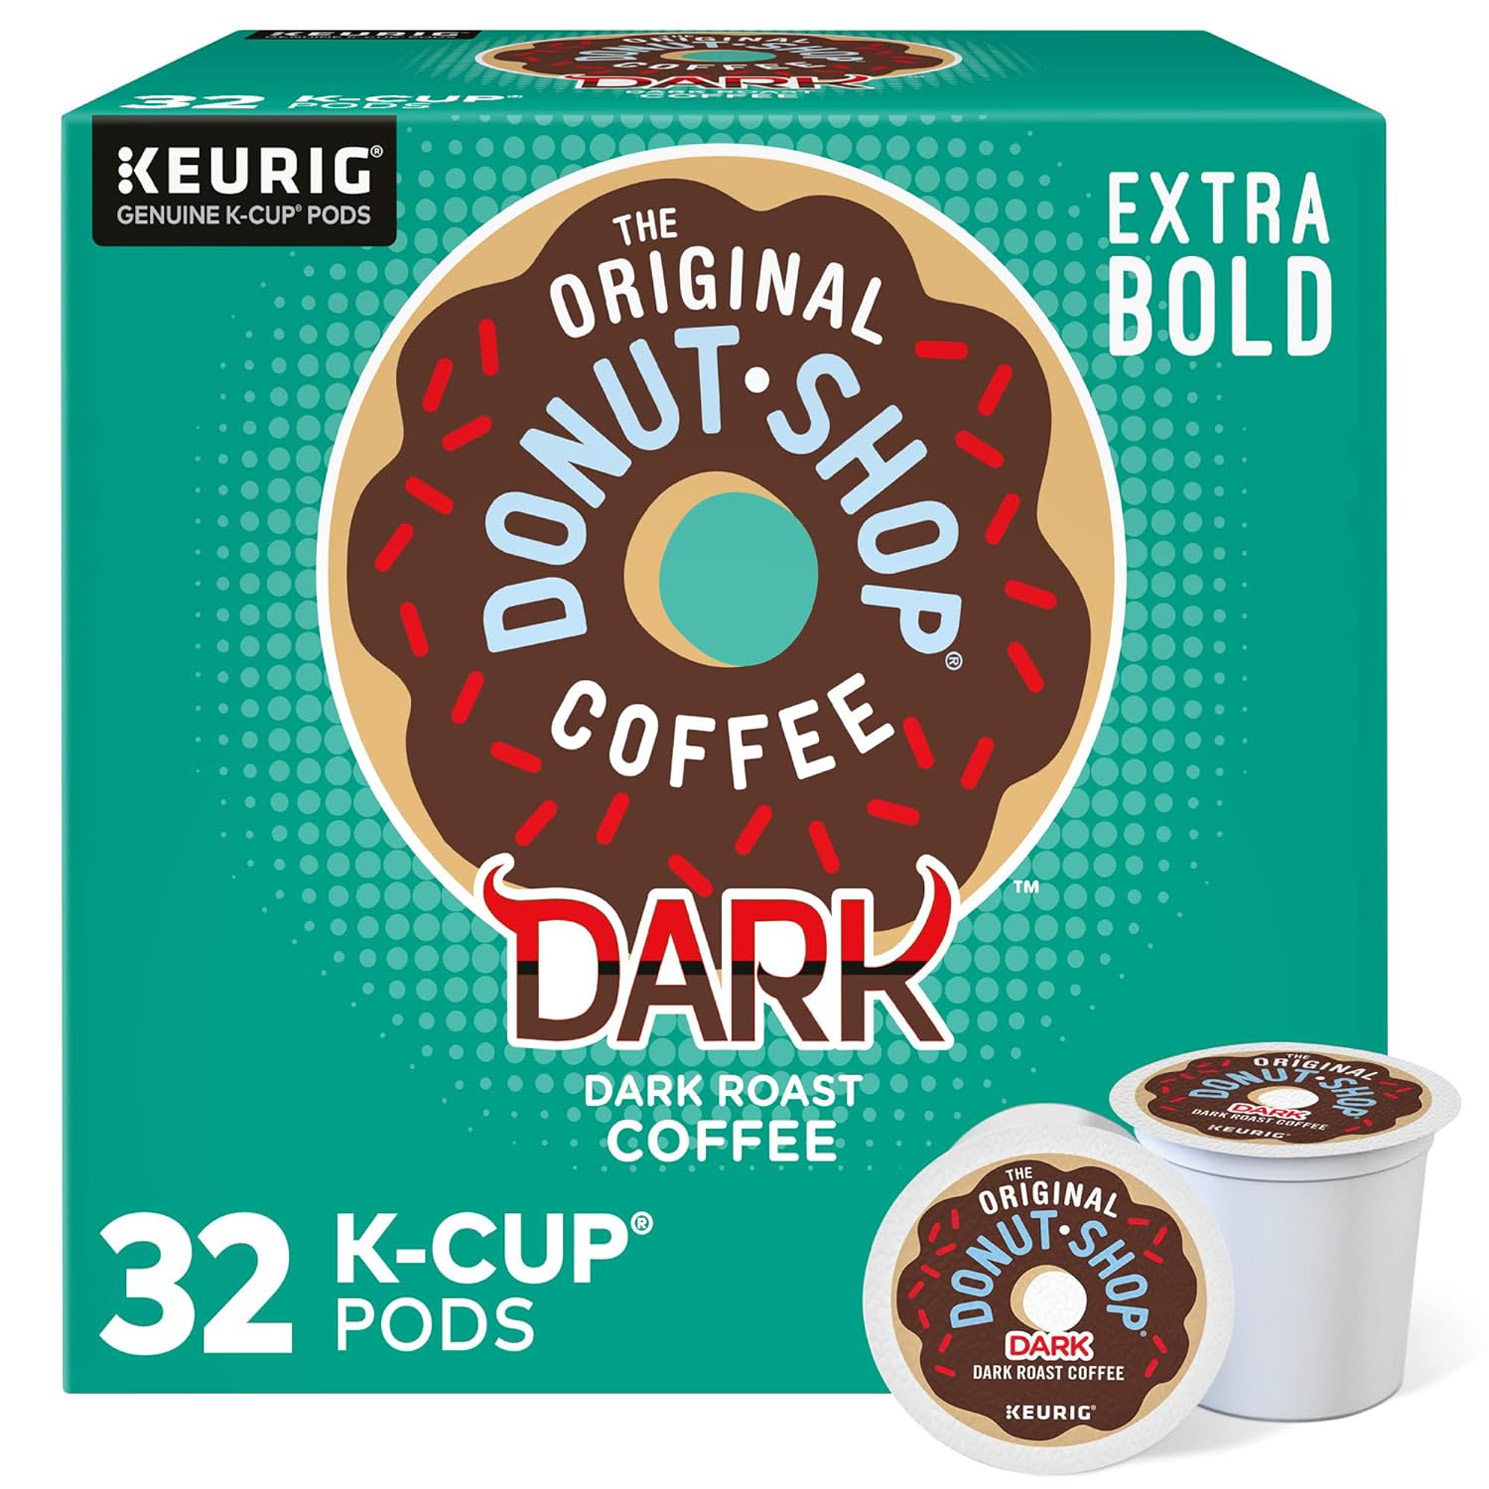 The Original Donut Shop Dark Coffee, Keurig Single-Serve K-Cup Pods, Dark Roast